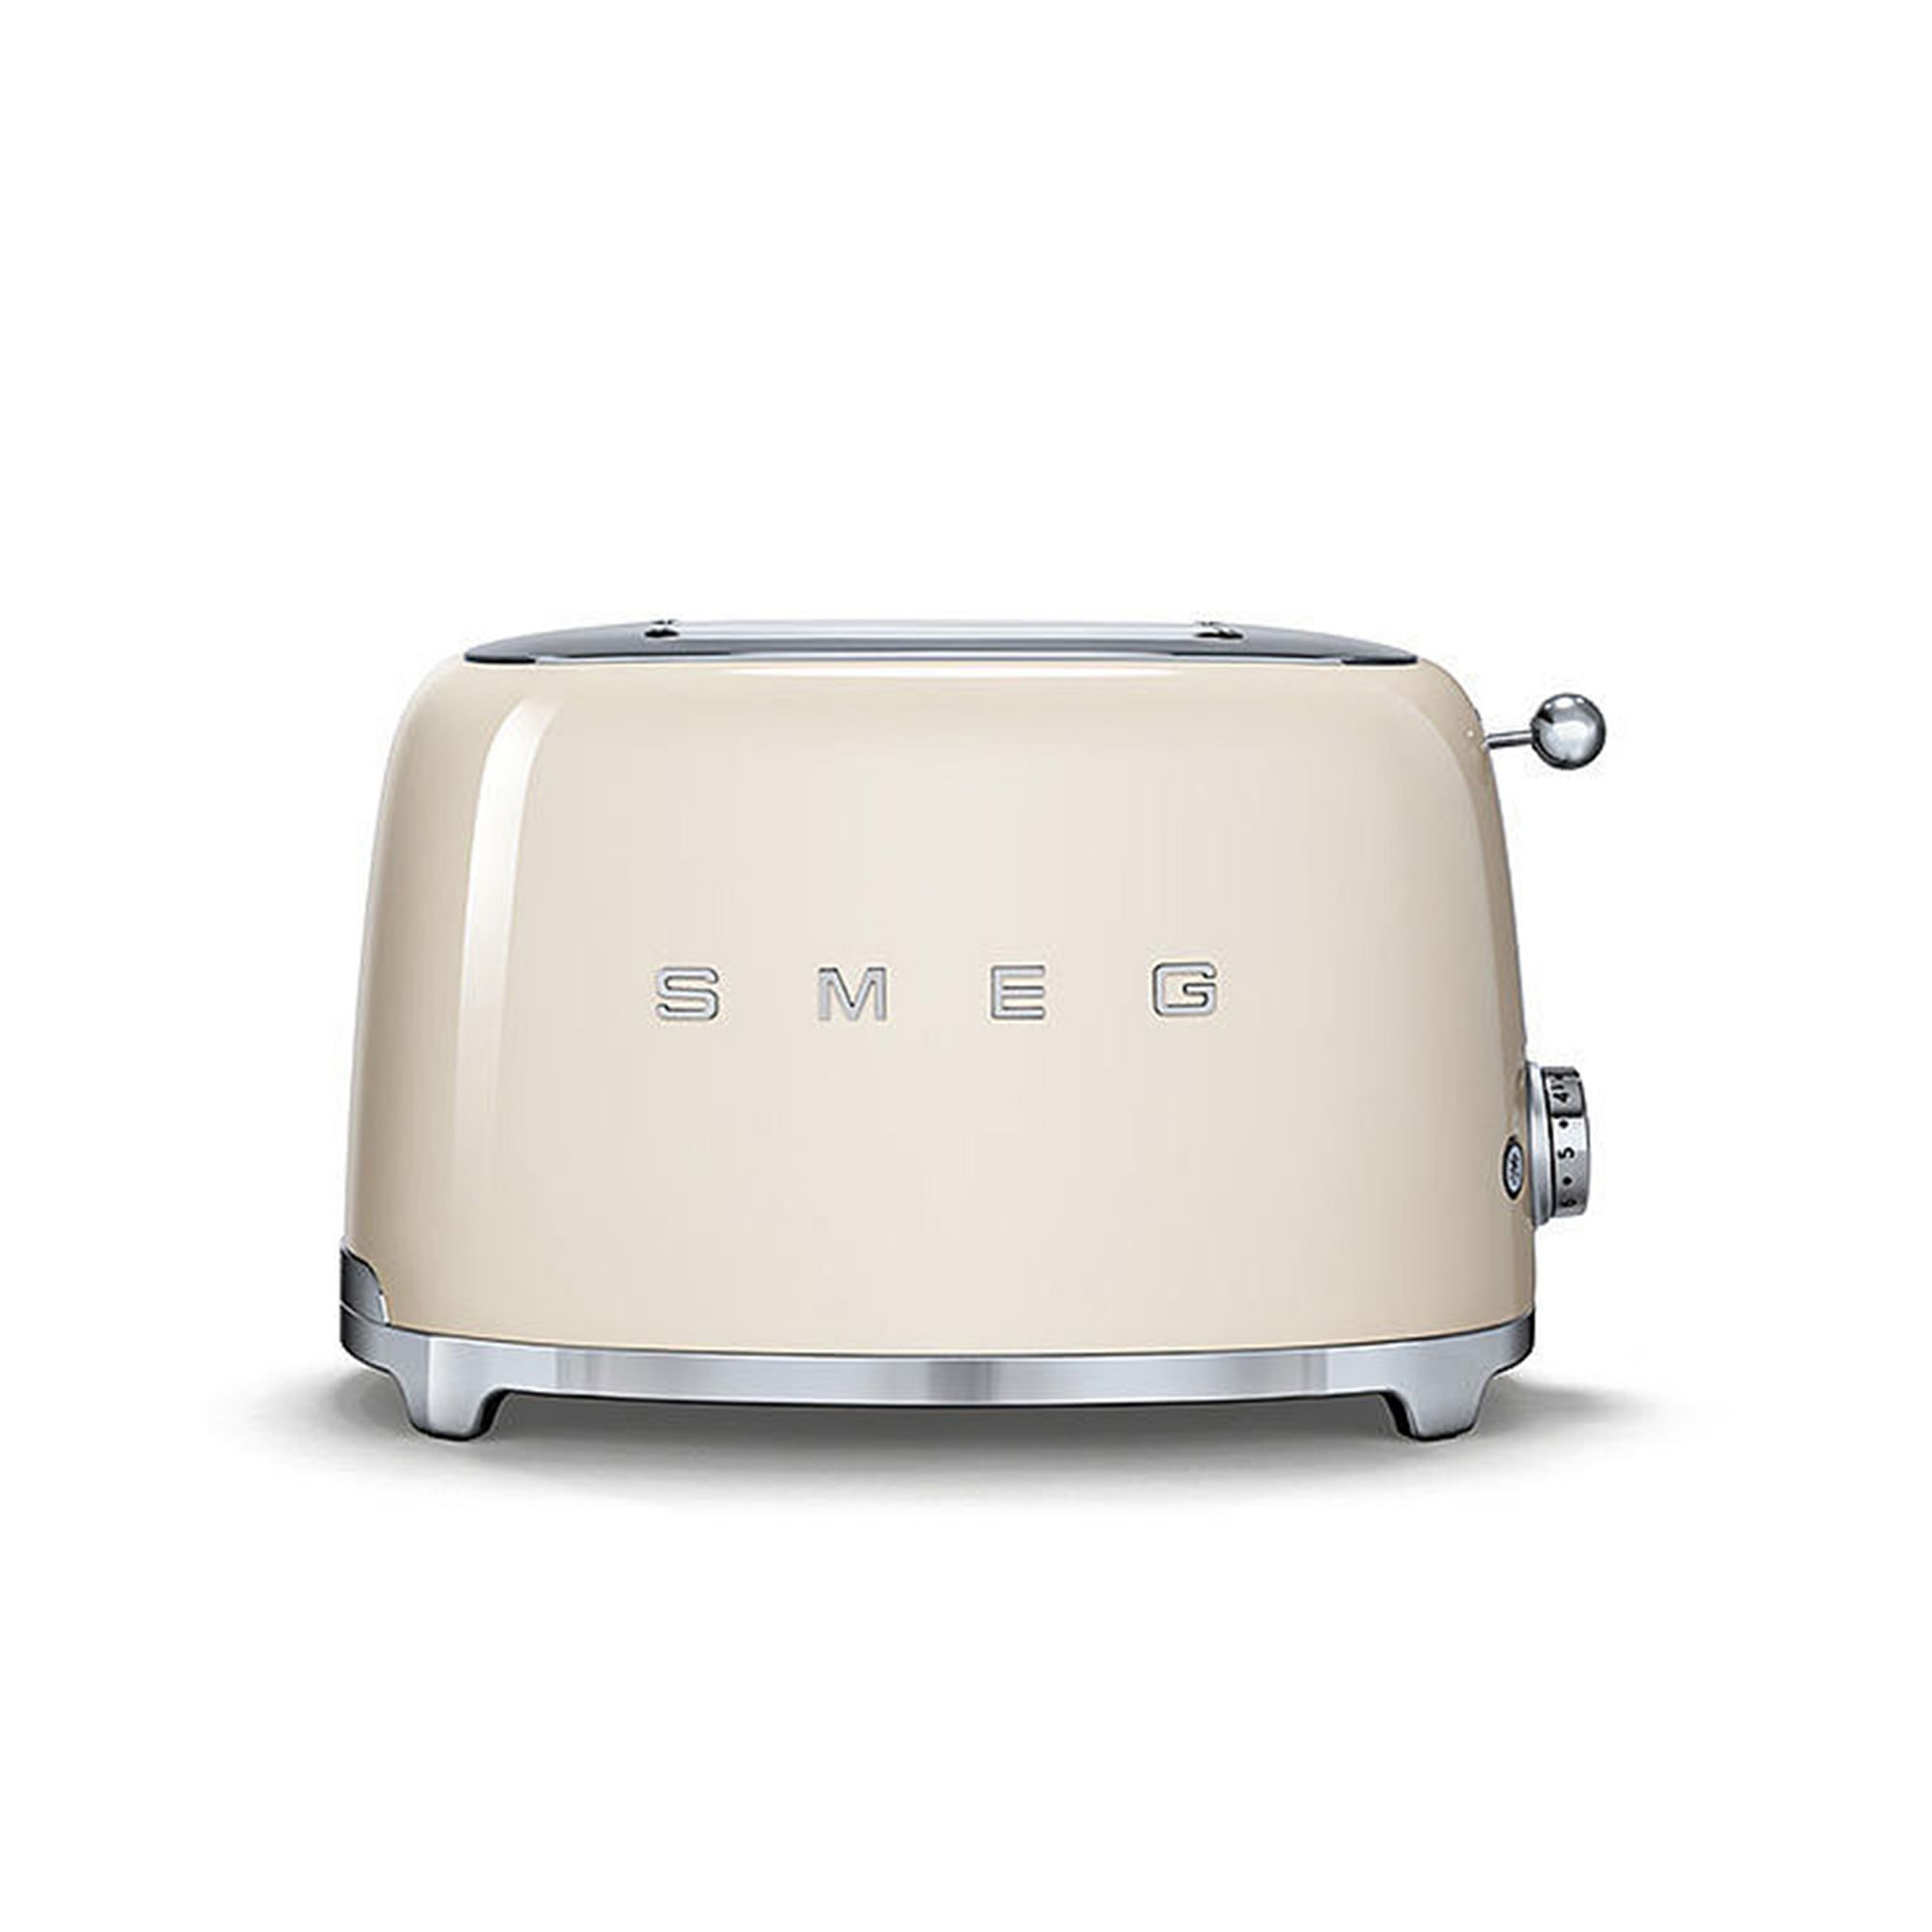 Smeg Toaster - 2 Slice | West Elm